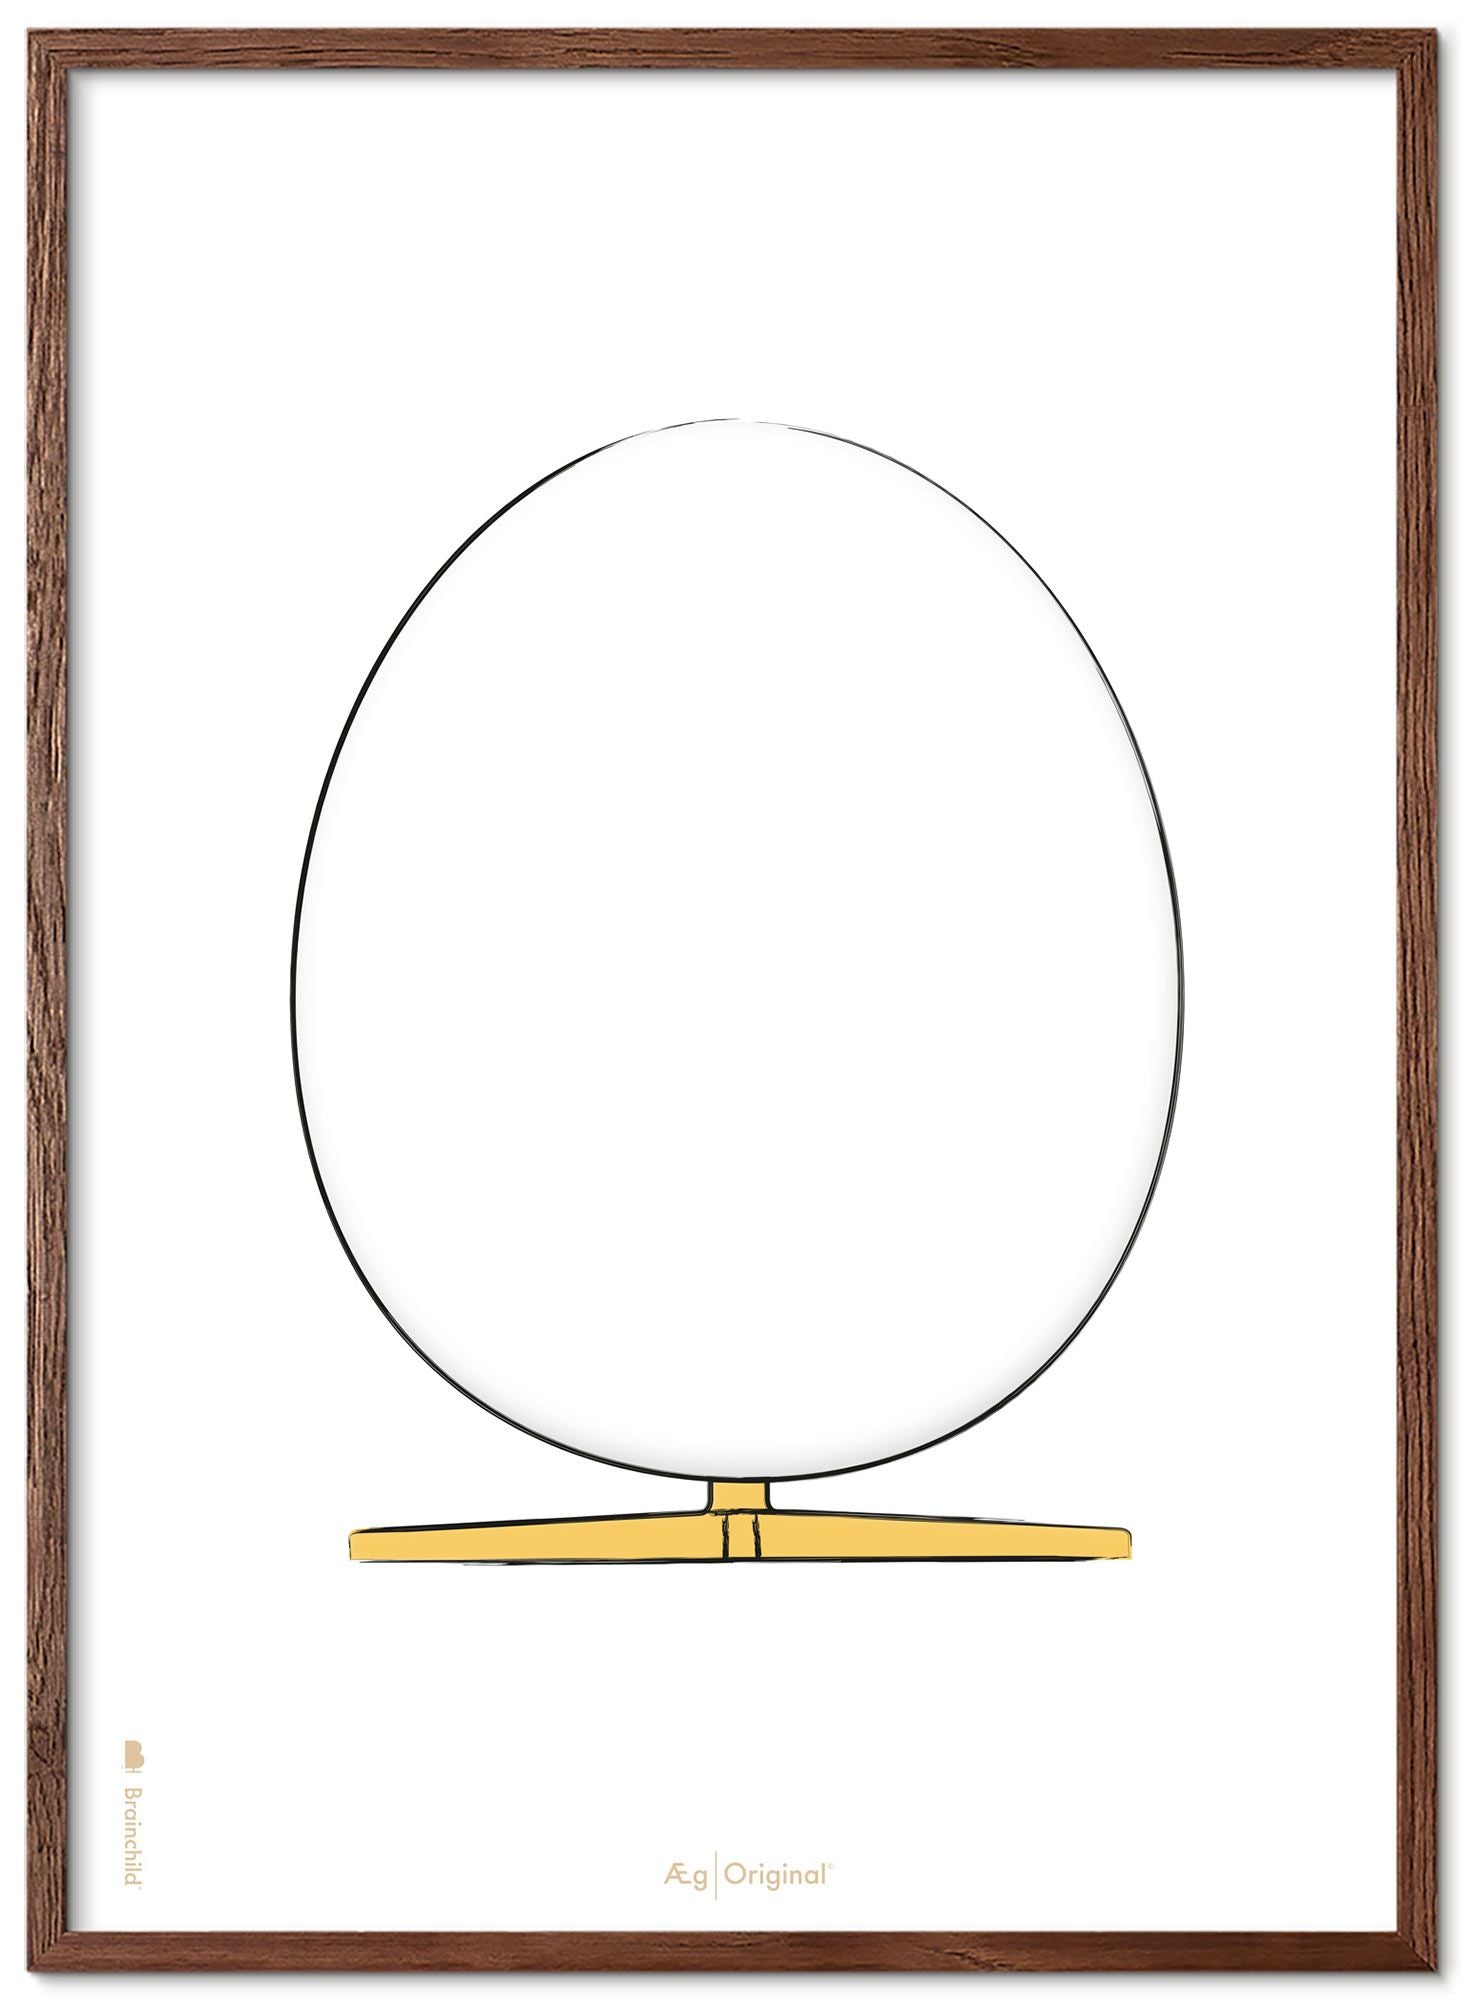 Brainchild The Egg Design Sketch Poster Frame Made Of Dark Wood 50x70 Cm, White Background